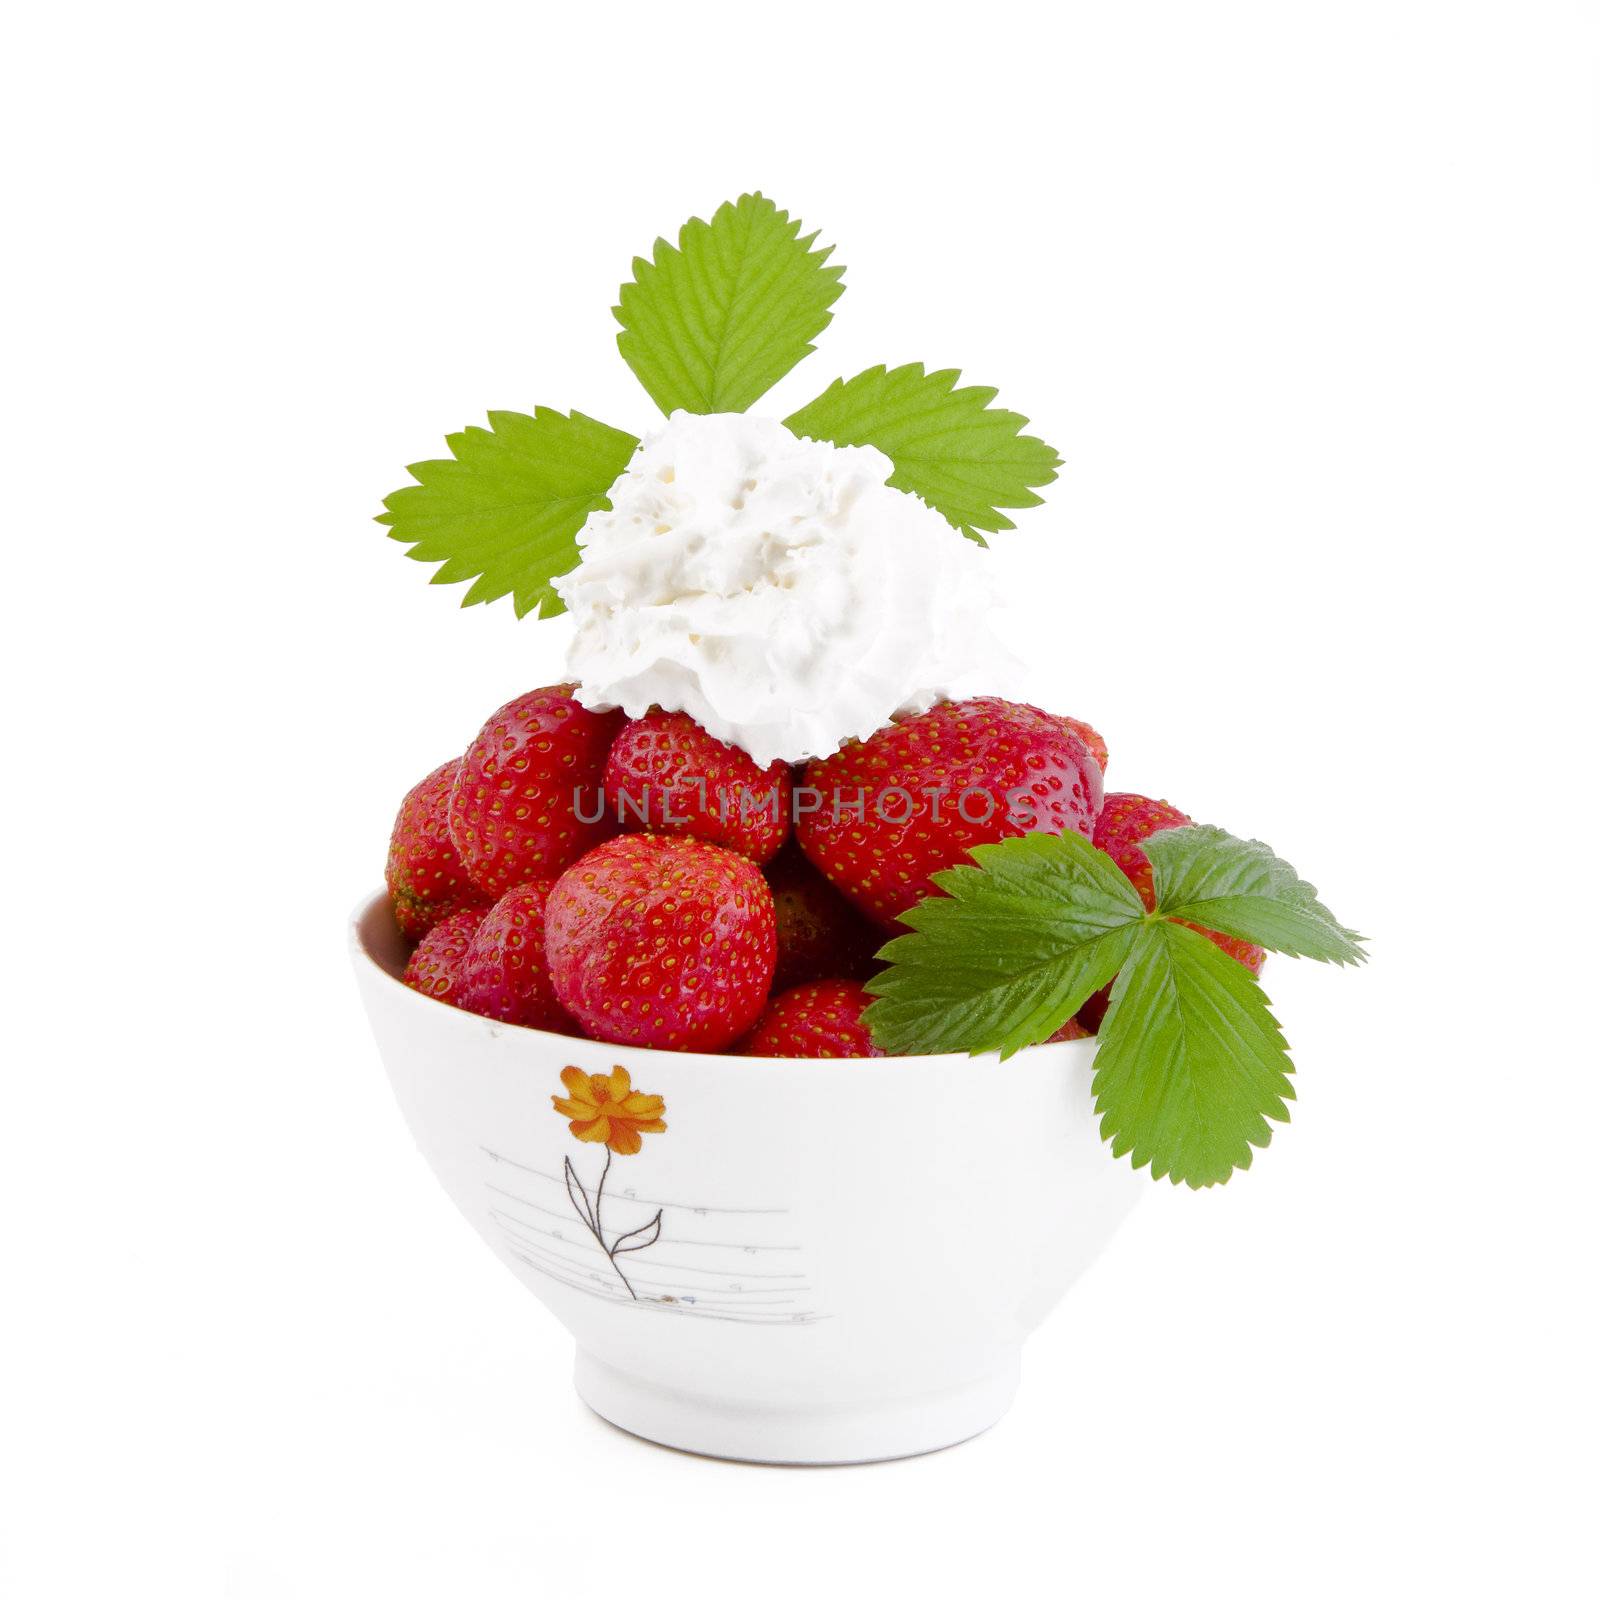 Strawberry dessert by Gbuglok